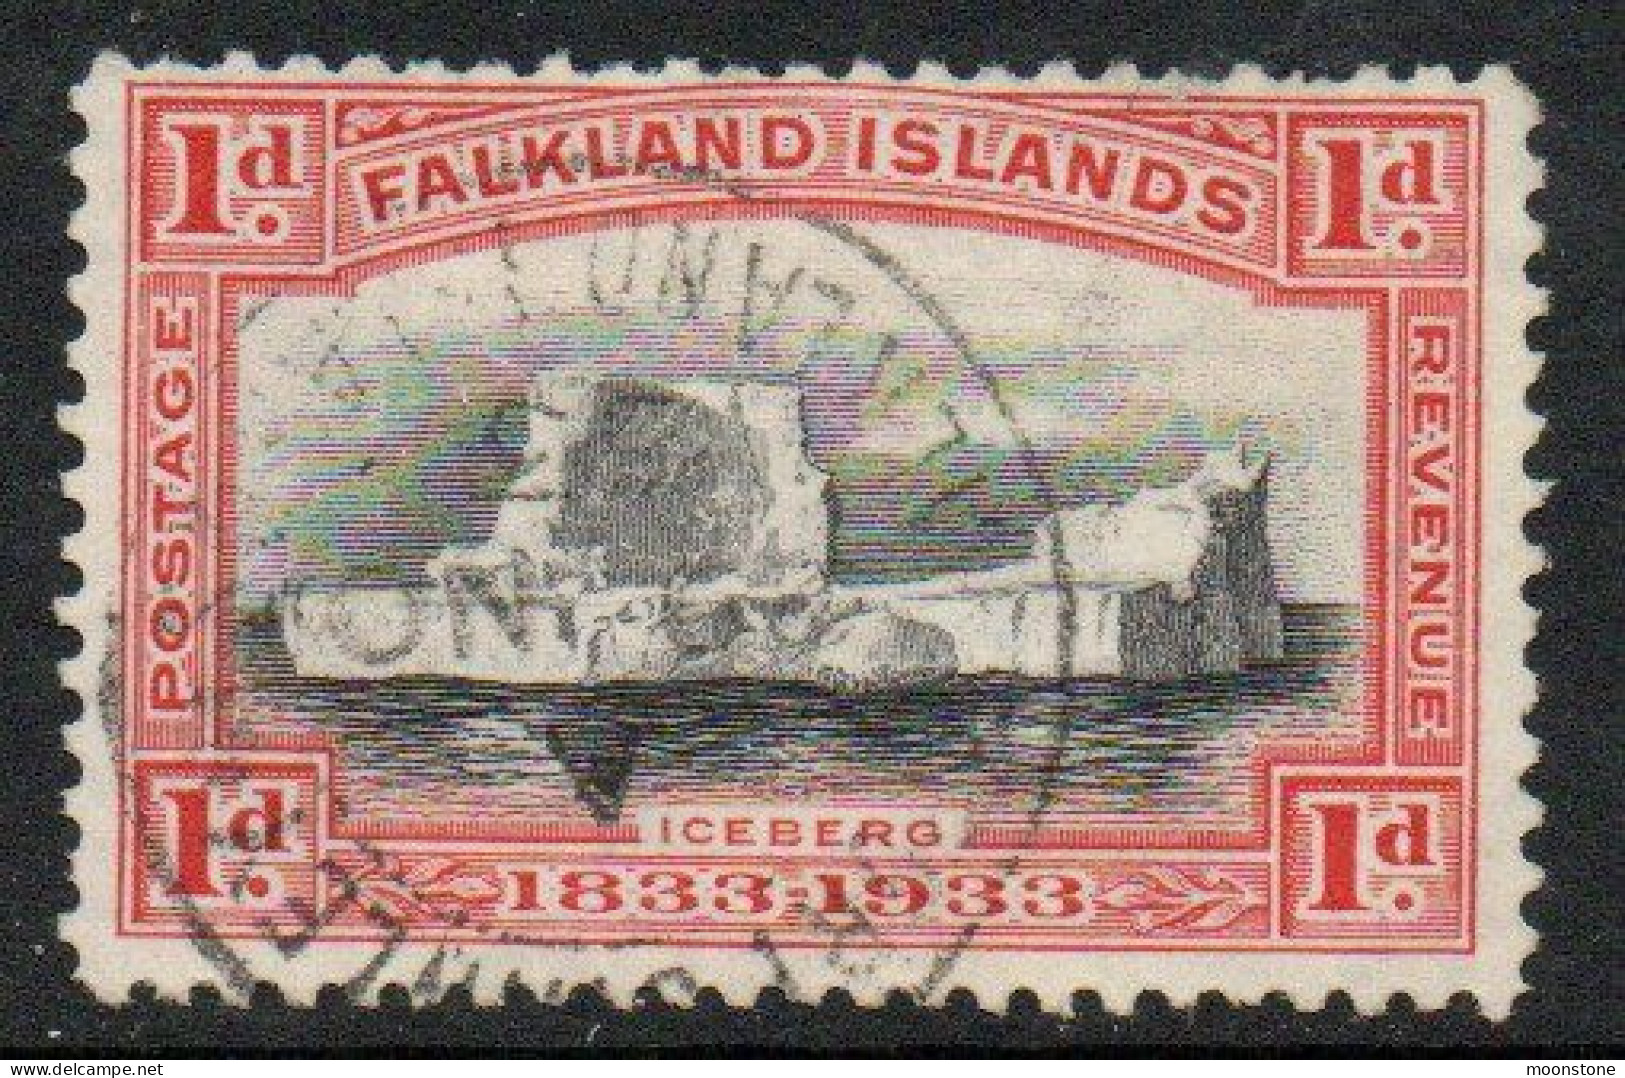 Falkland Islands GV 1933 Centenary 1d Value, Wmk. Multiple Script CA, Used, SG 128 - Falkland Islands